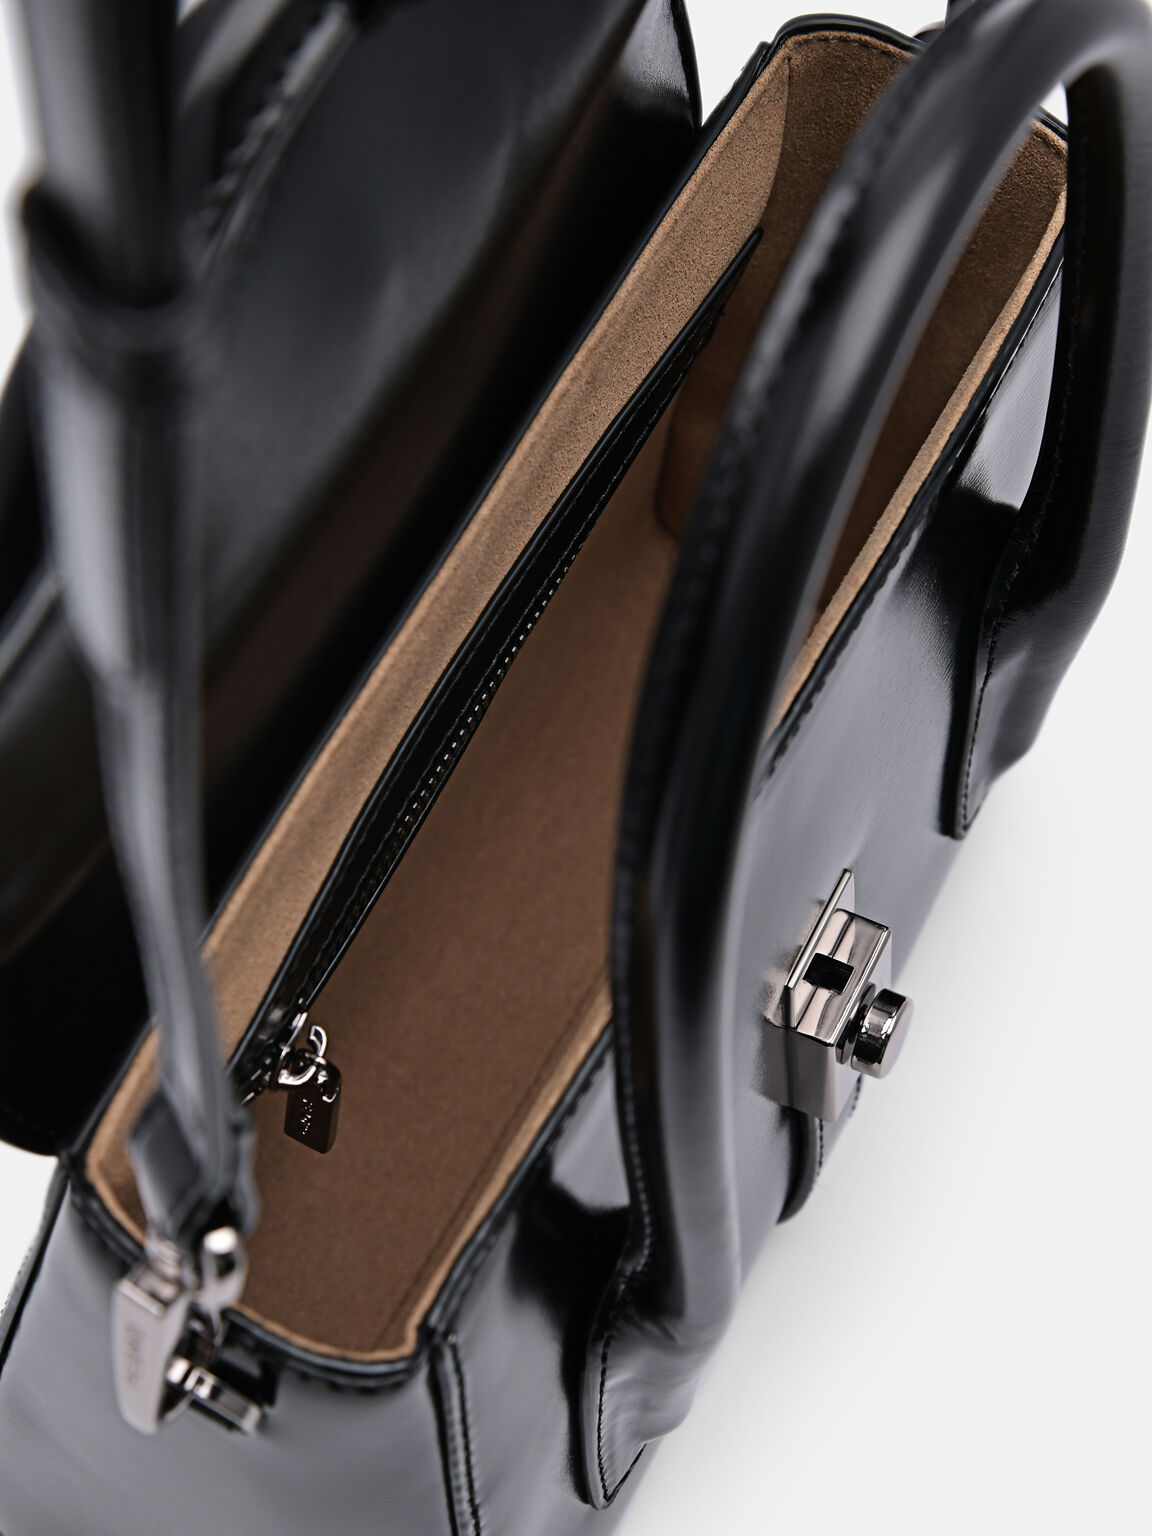 PEDRO Studio Farida Leather Compact Handbag, Black